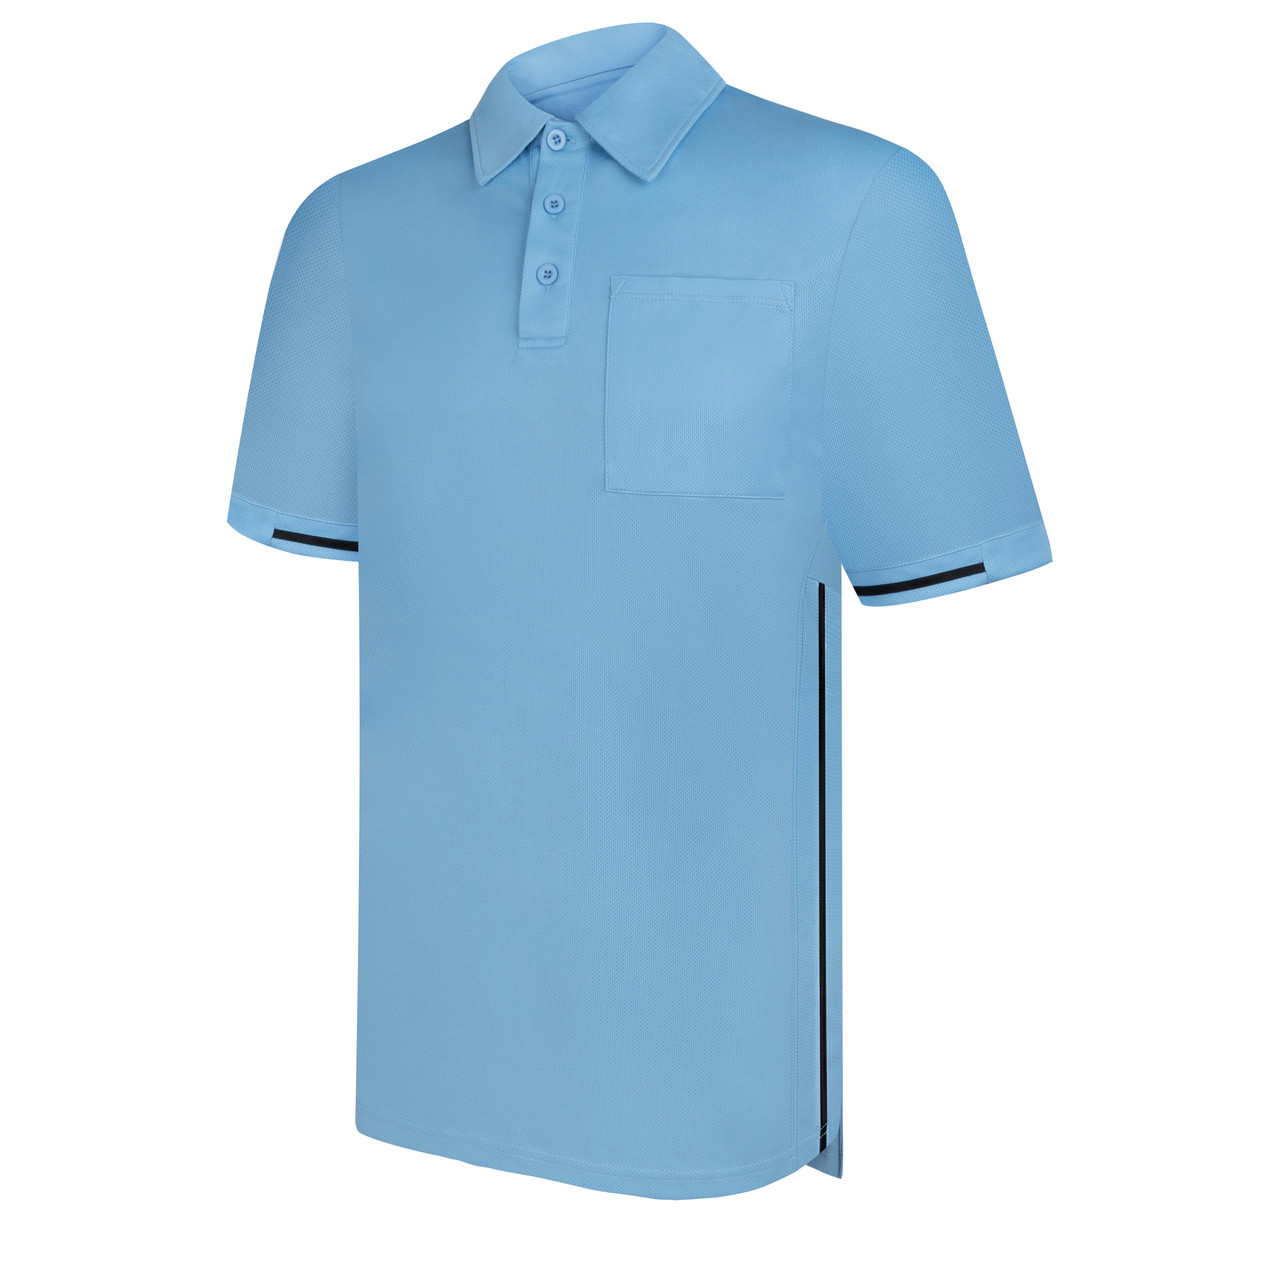 Referee Store | United Attire Baseball Umpire Shirt - Blue with Black Stripe Black Medium